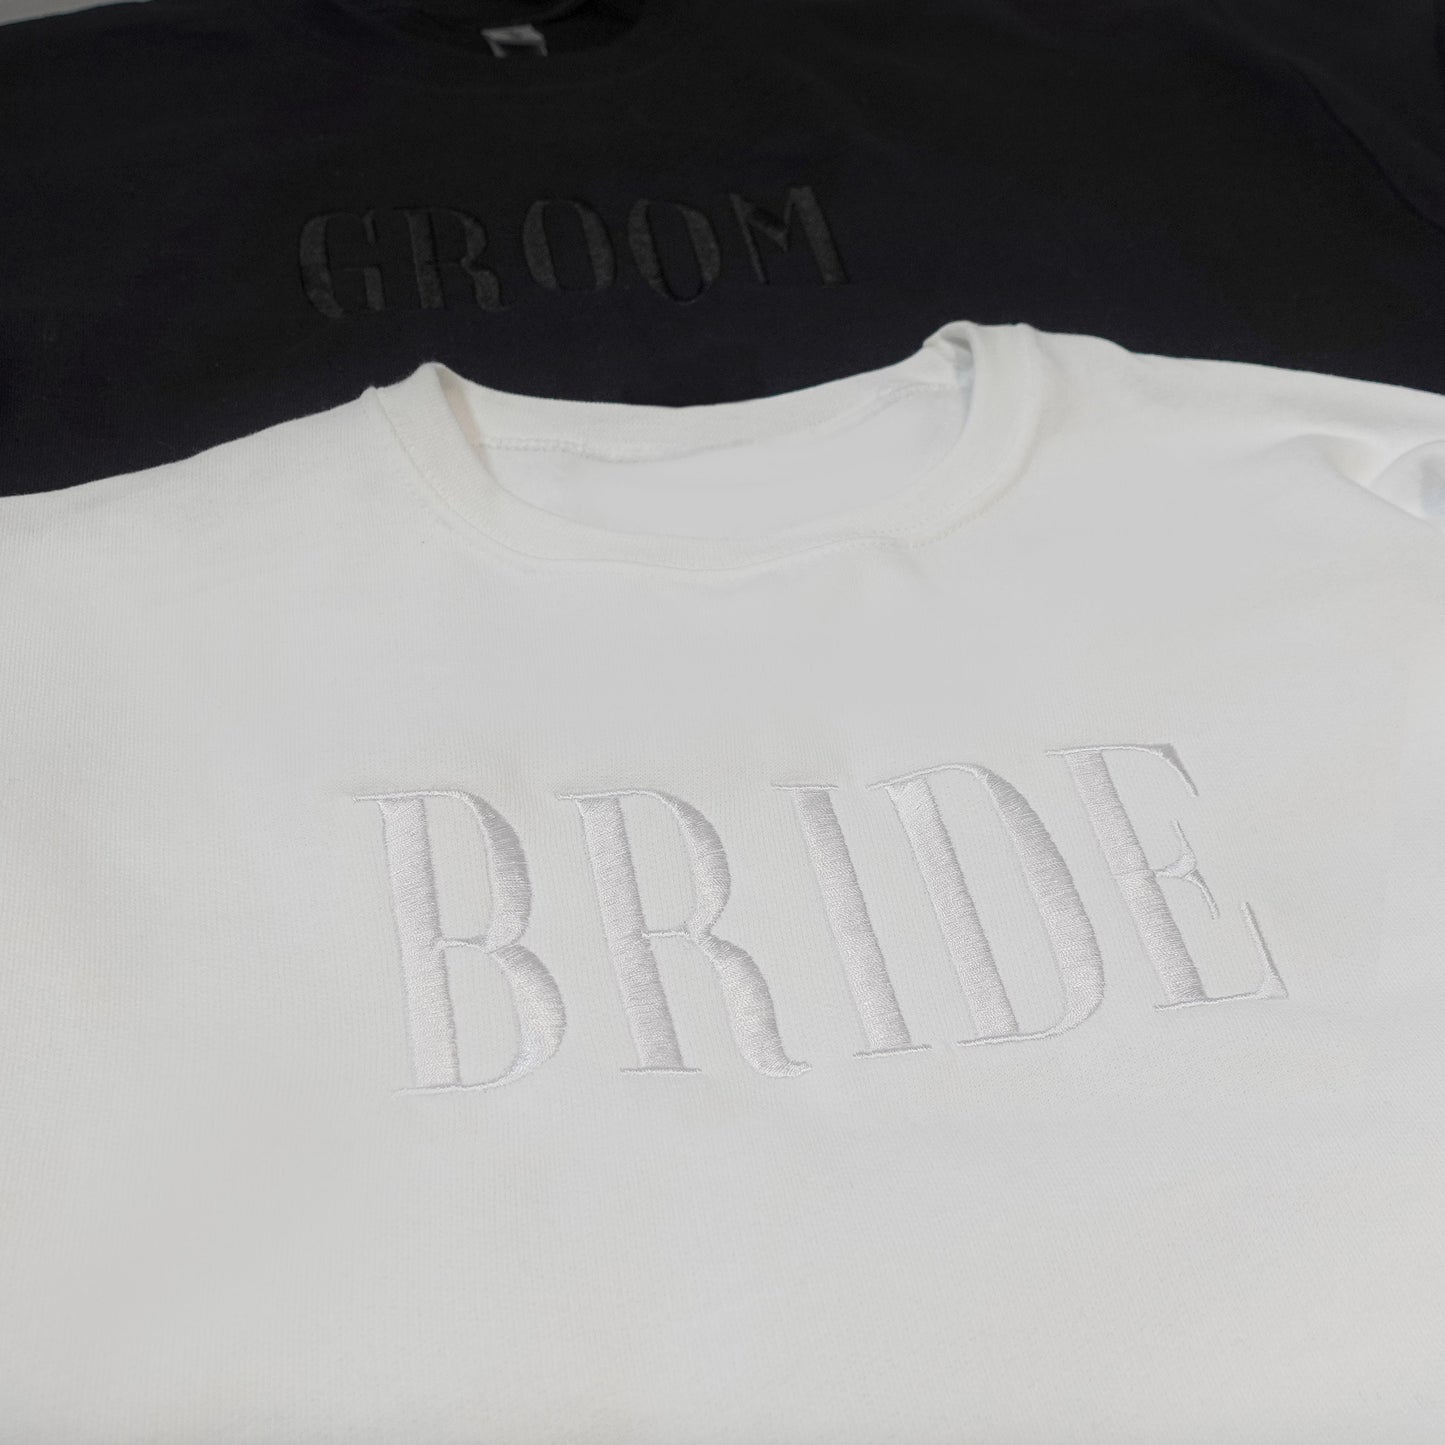 Bride Embroidered Sweatshirt, Bride Crewneck, Bride Sweater, Embroidered Groom Sweatshirt, Bridal Gift, Team Bride, Bridal Shower Outfit